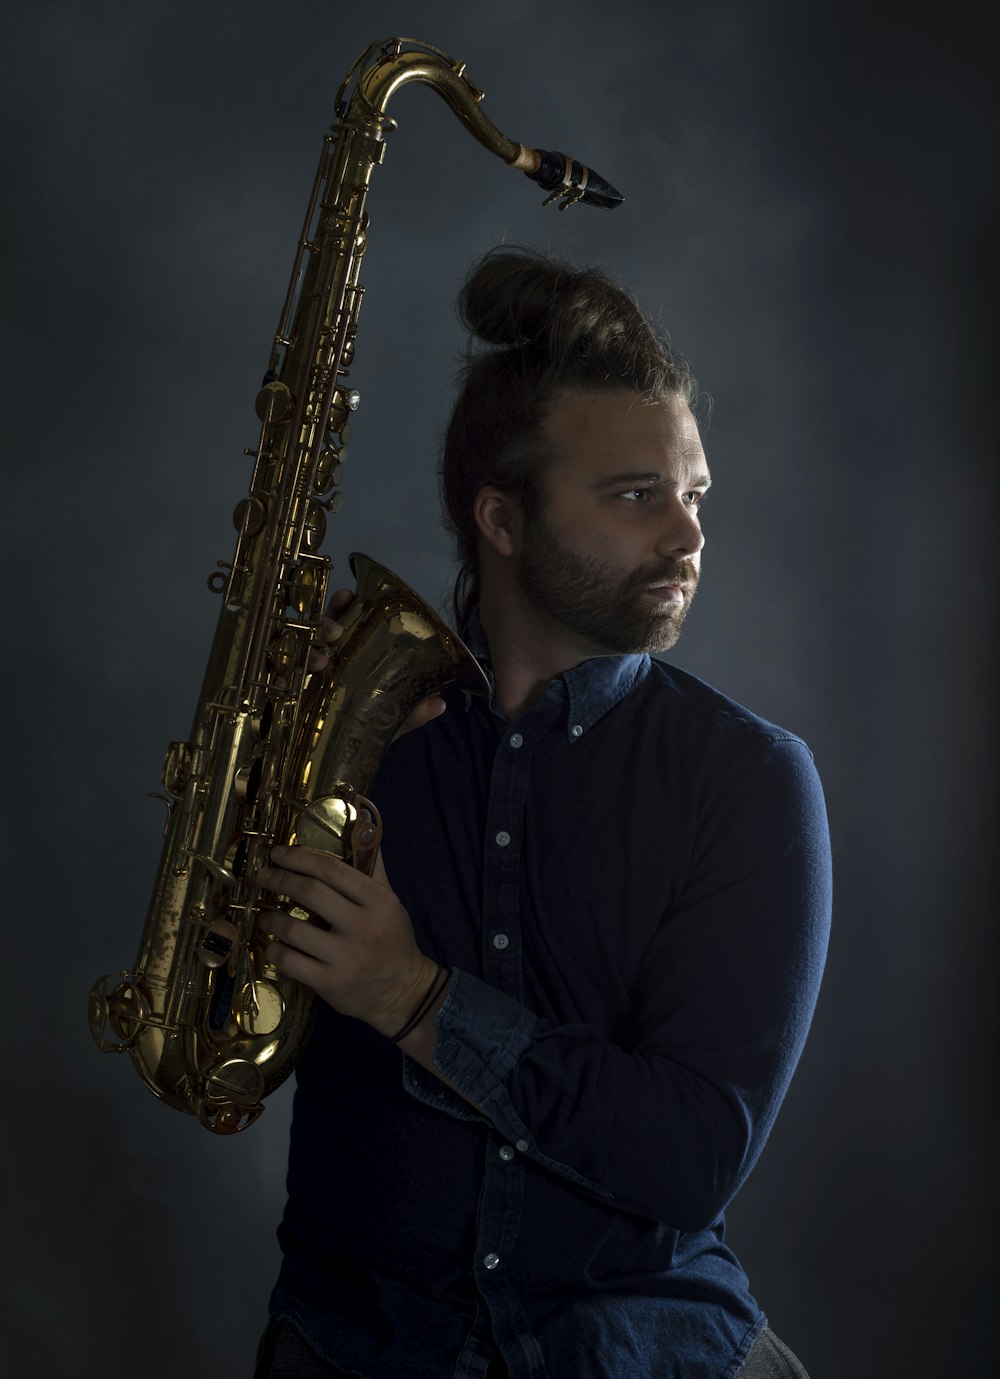 a man with a beard holding a saxophone